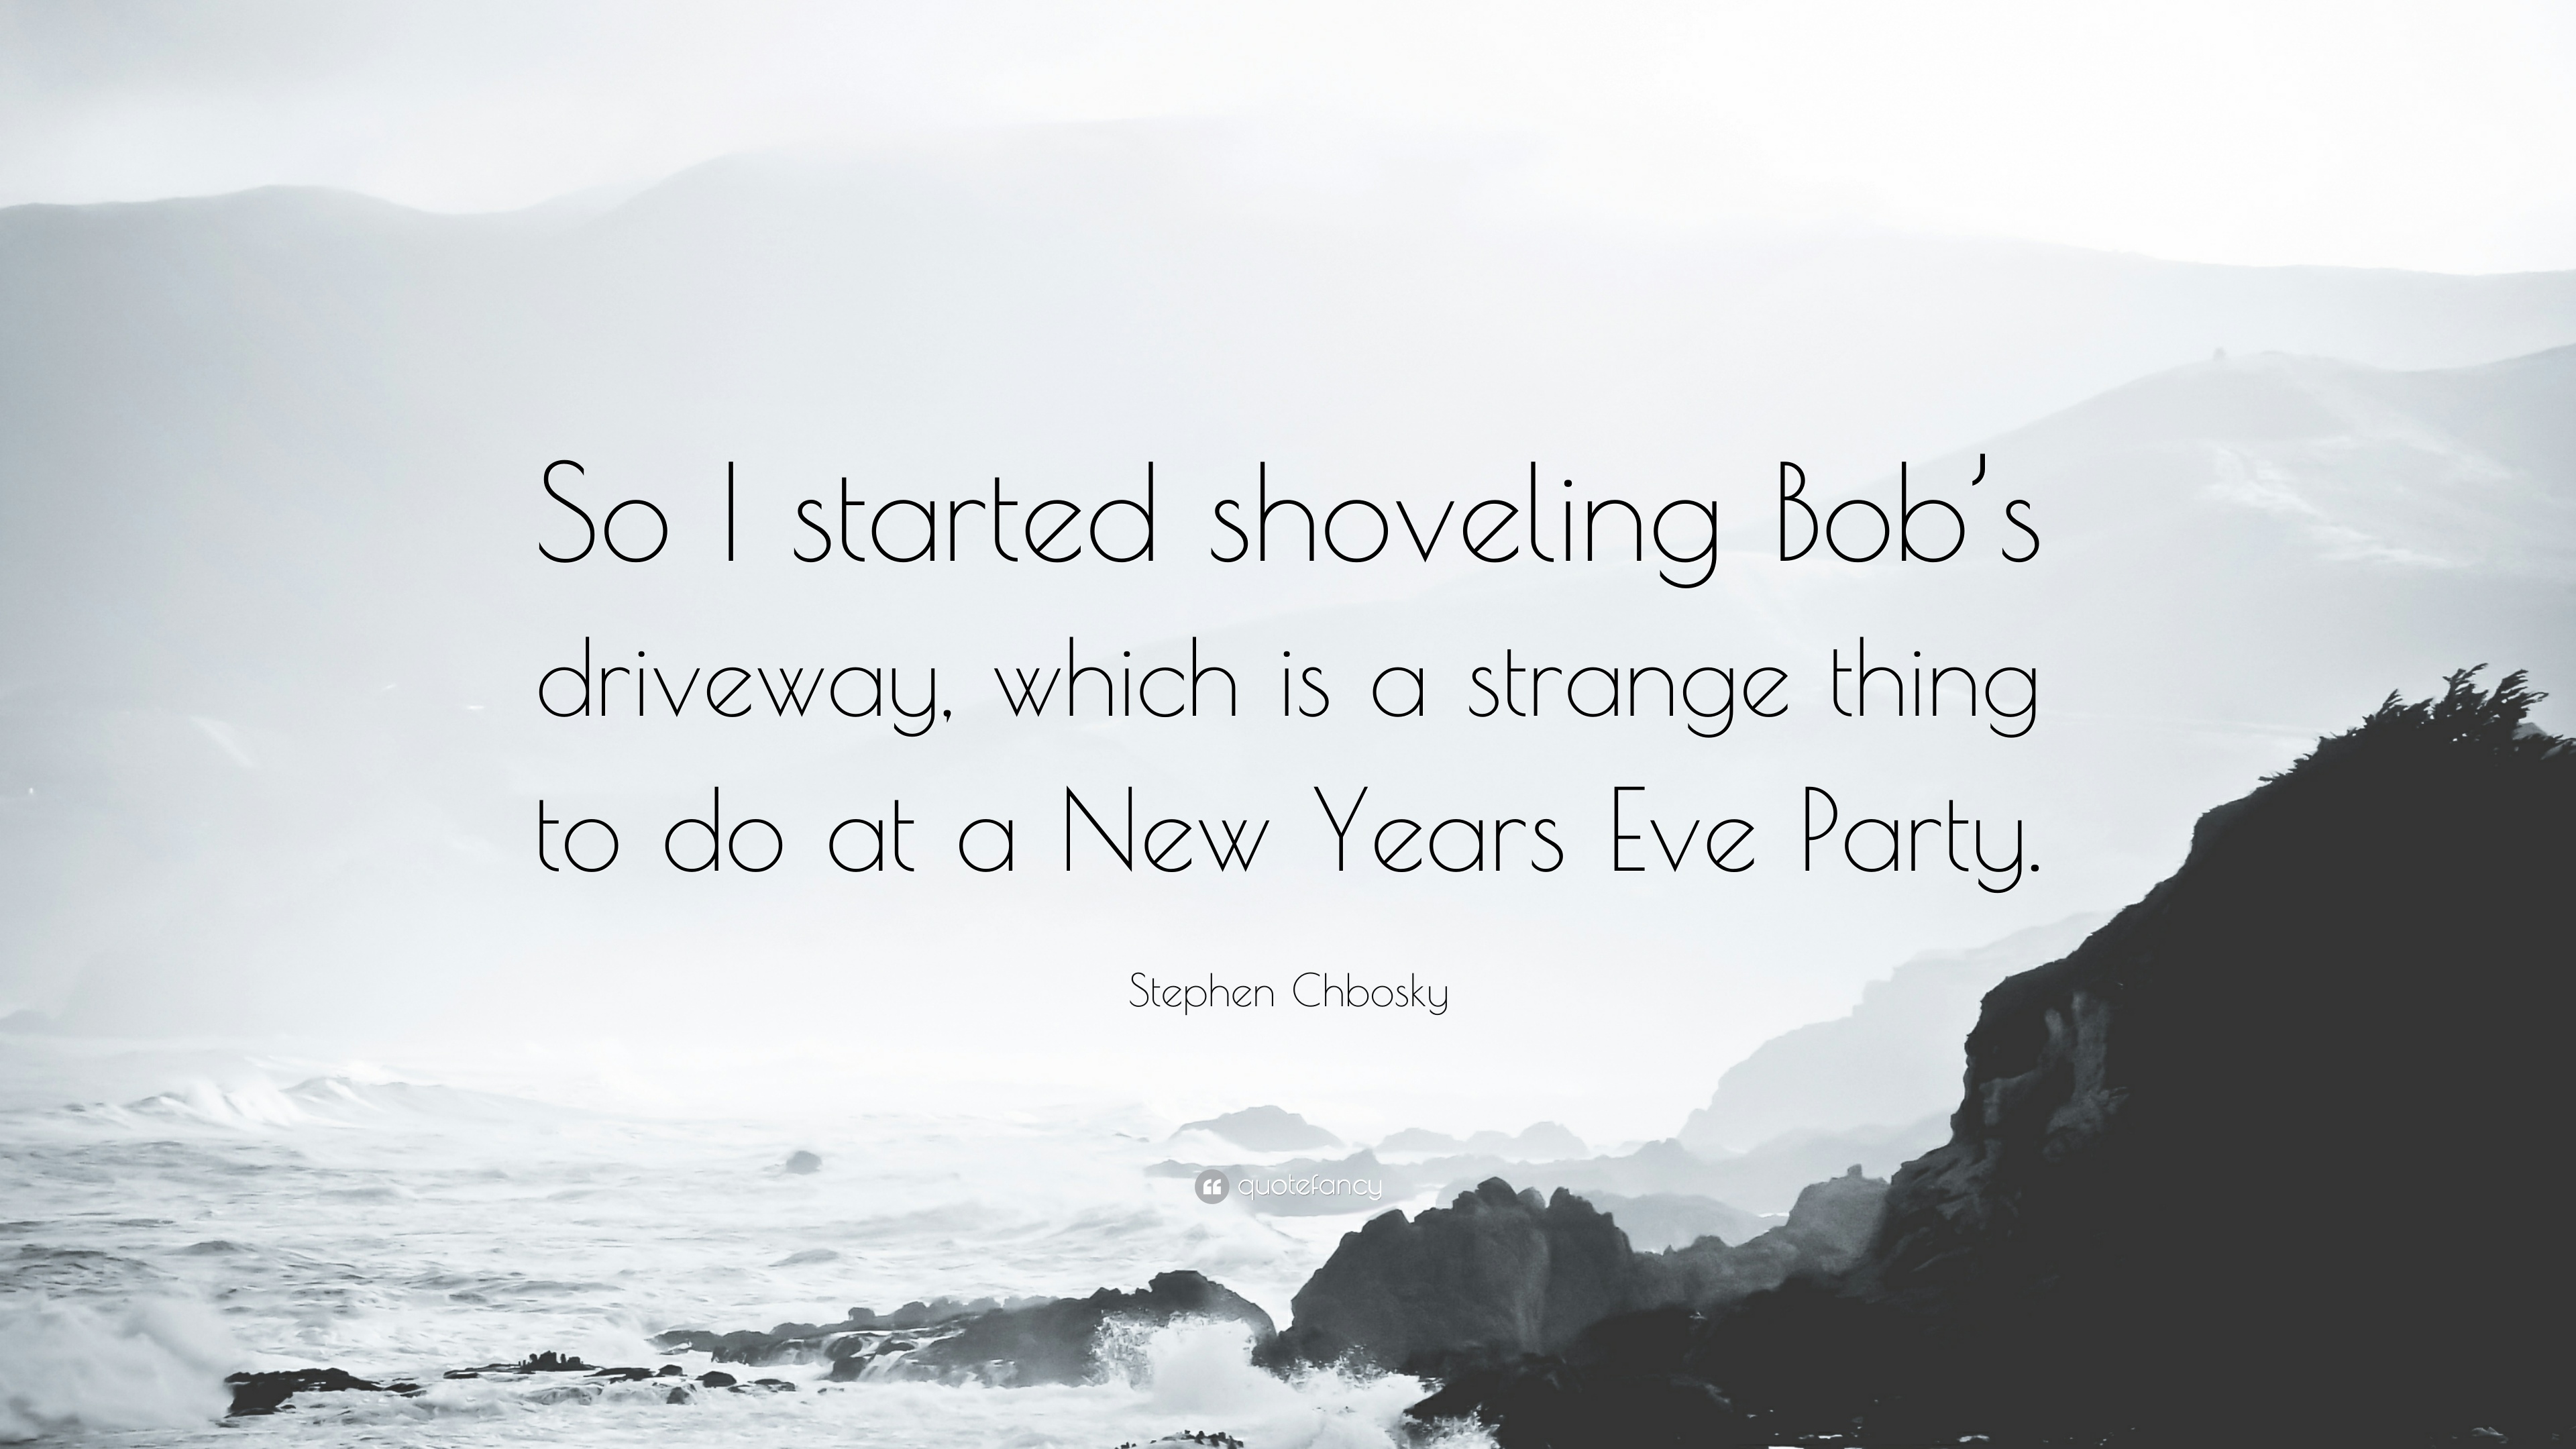 Stephen Chbosky Quote: “So I started shoveling Bob's